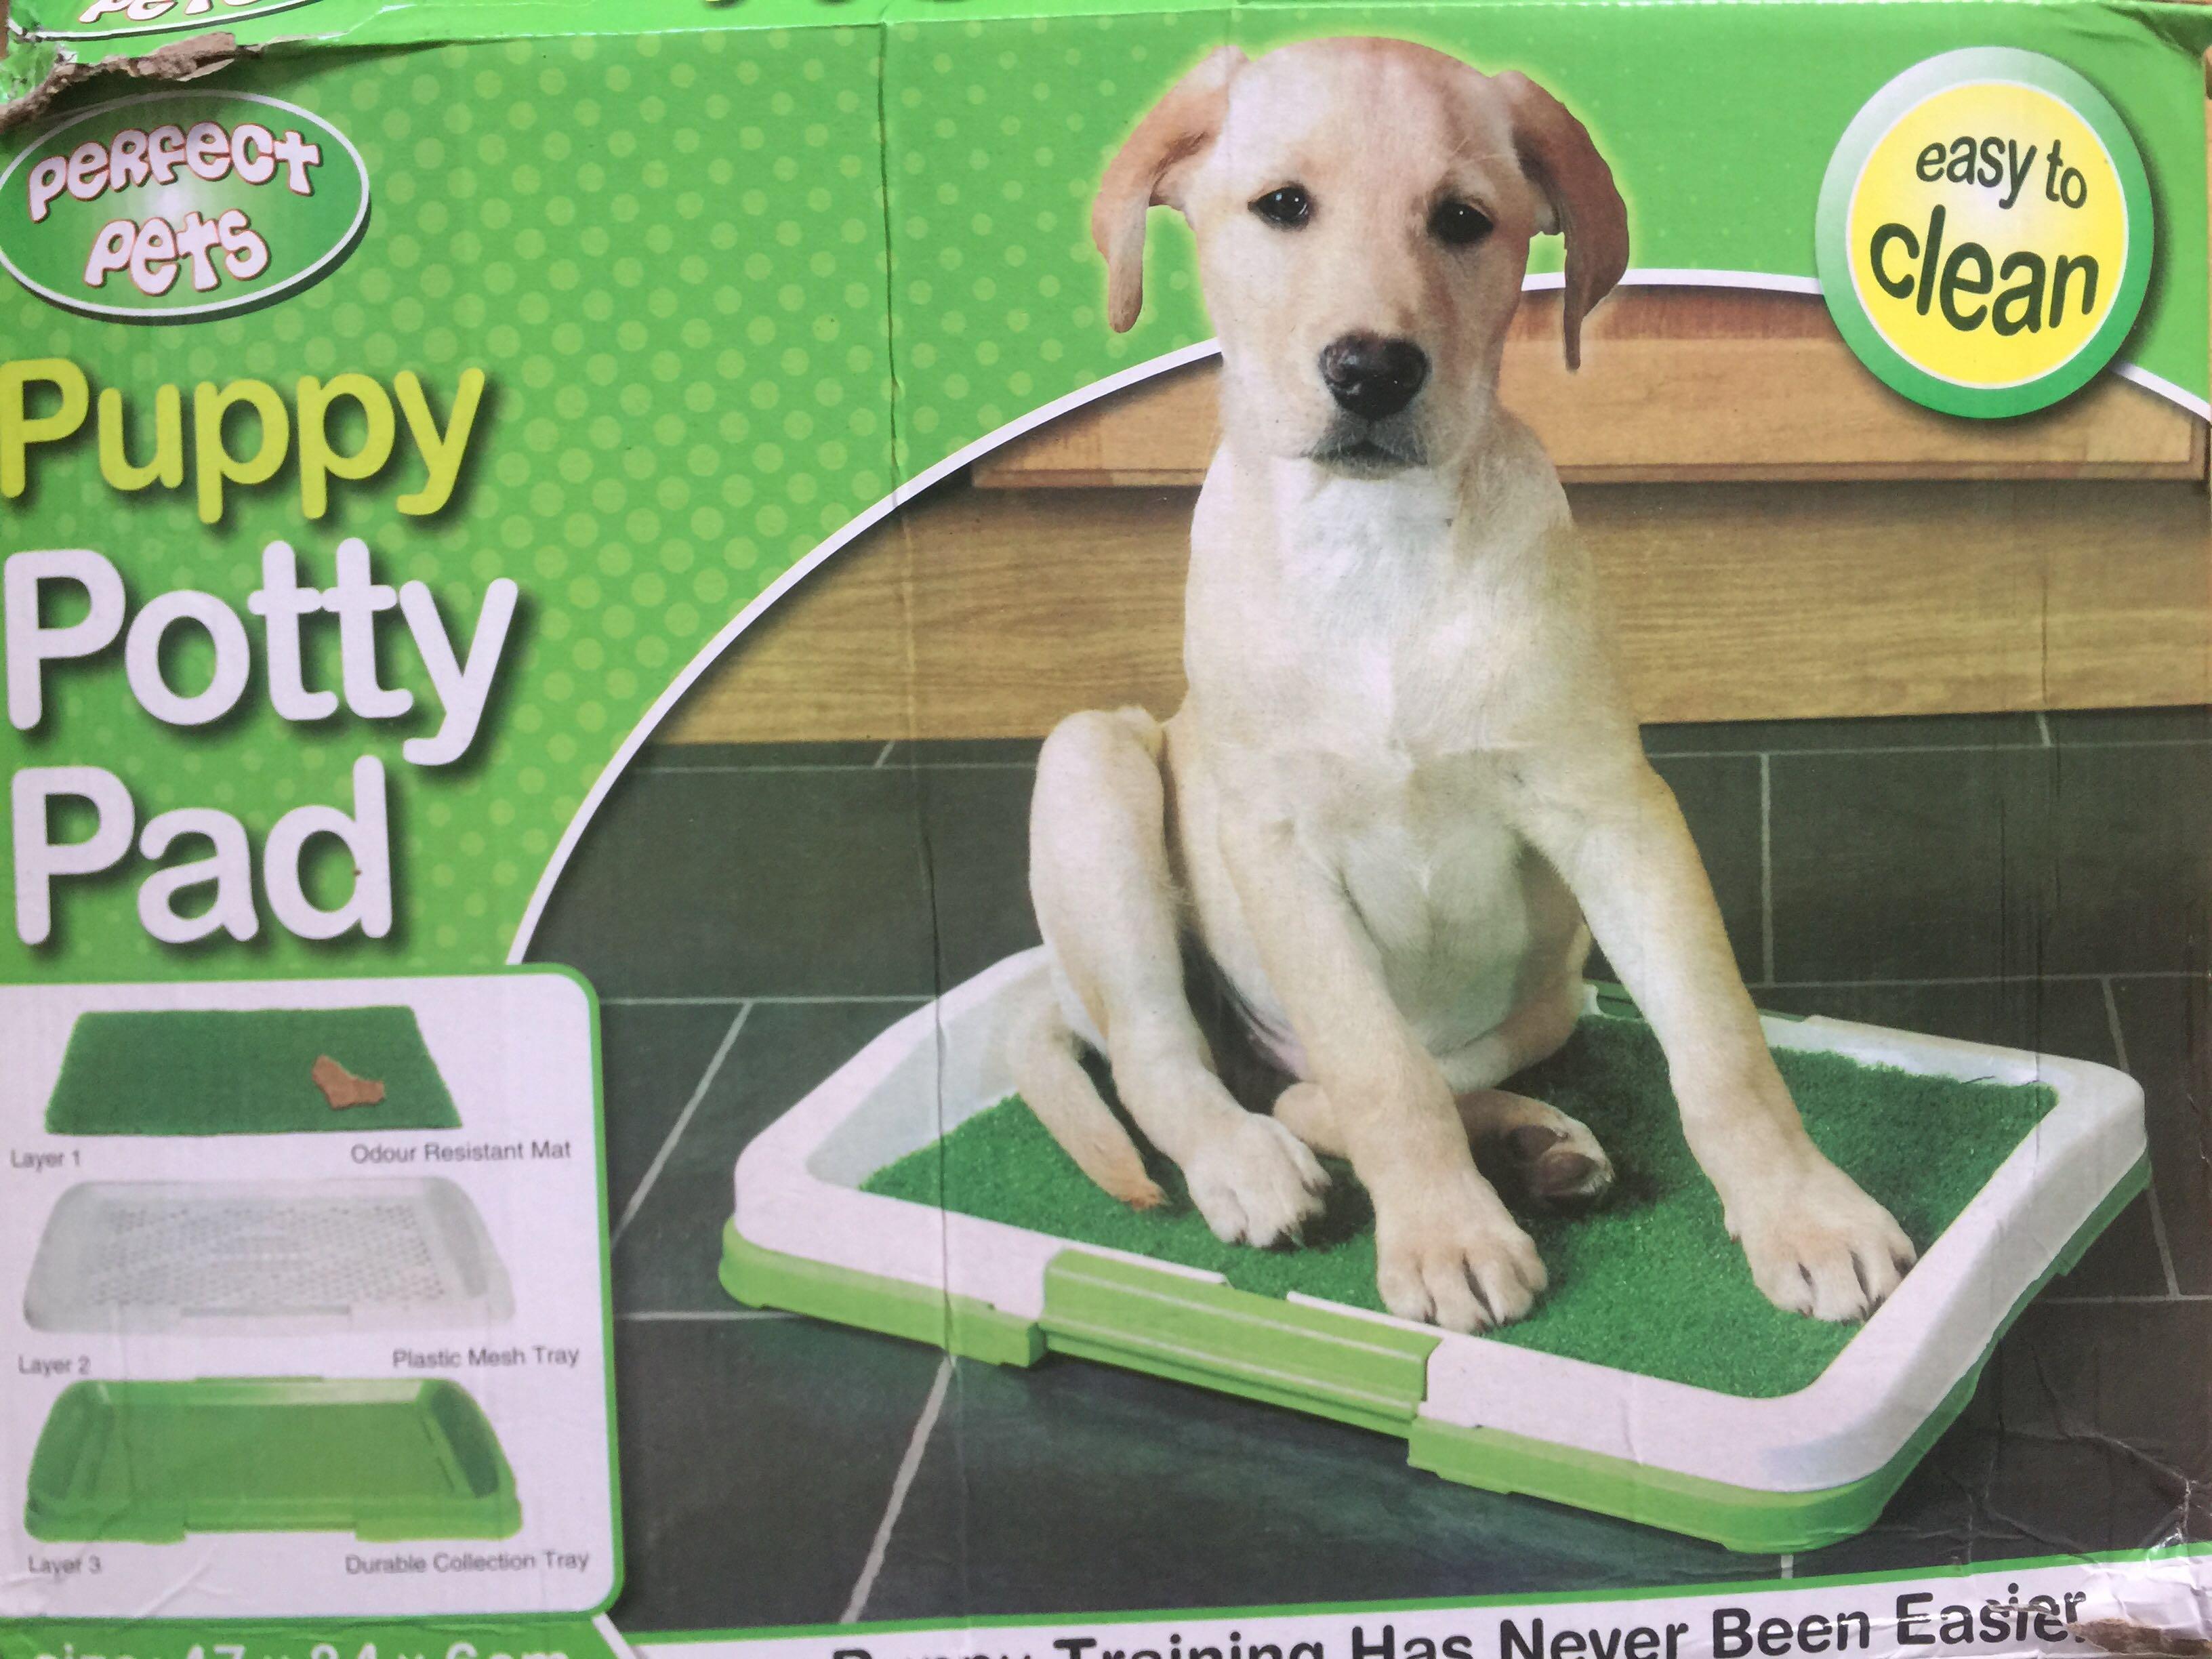 perfect pets puppy potty pad